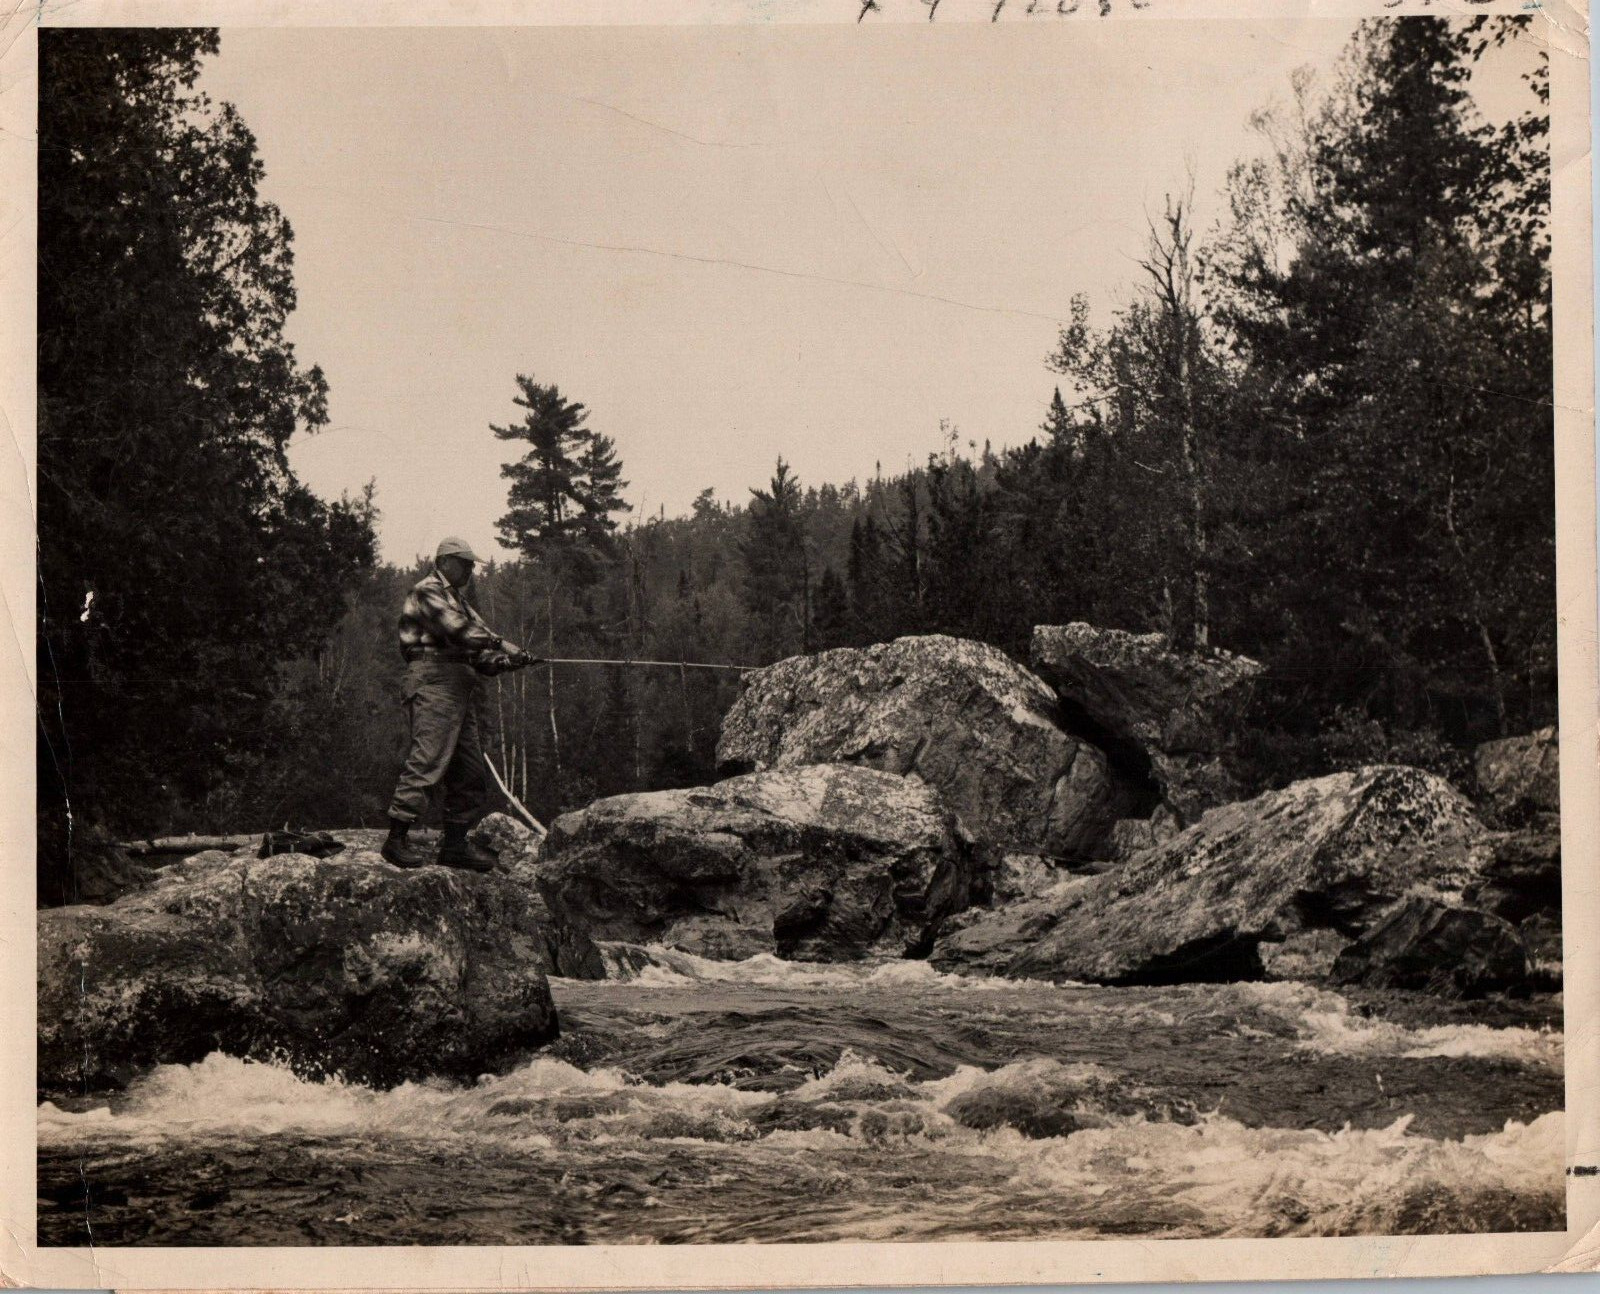 RARE 1938 CANADA FISHERMAN NORTHERN ONTARIO LAKES VINTAGE ORIGINAL PHOTO 217